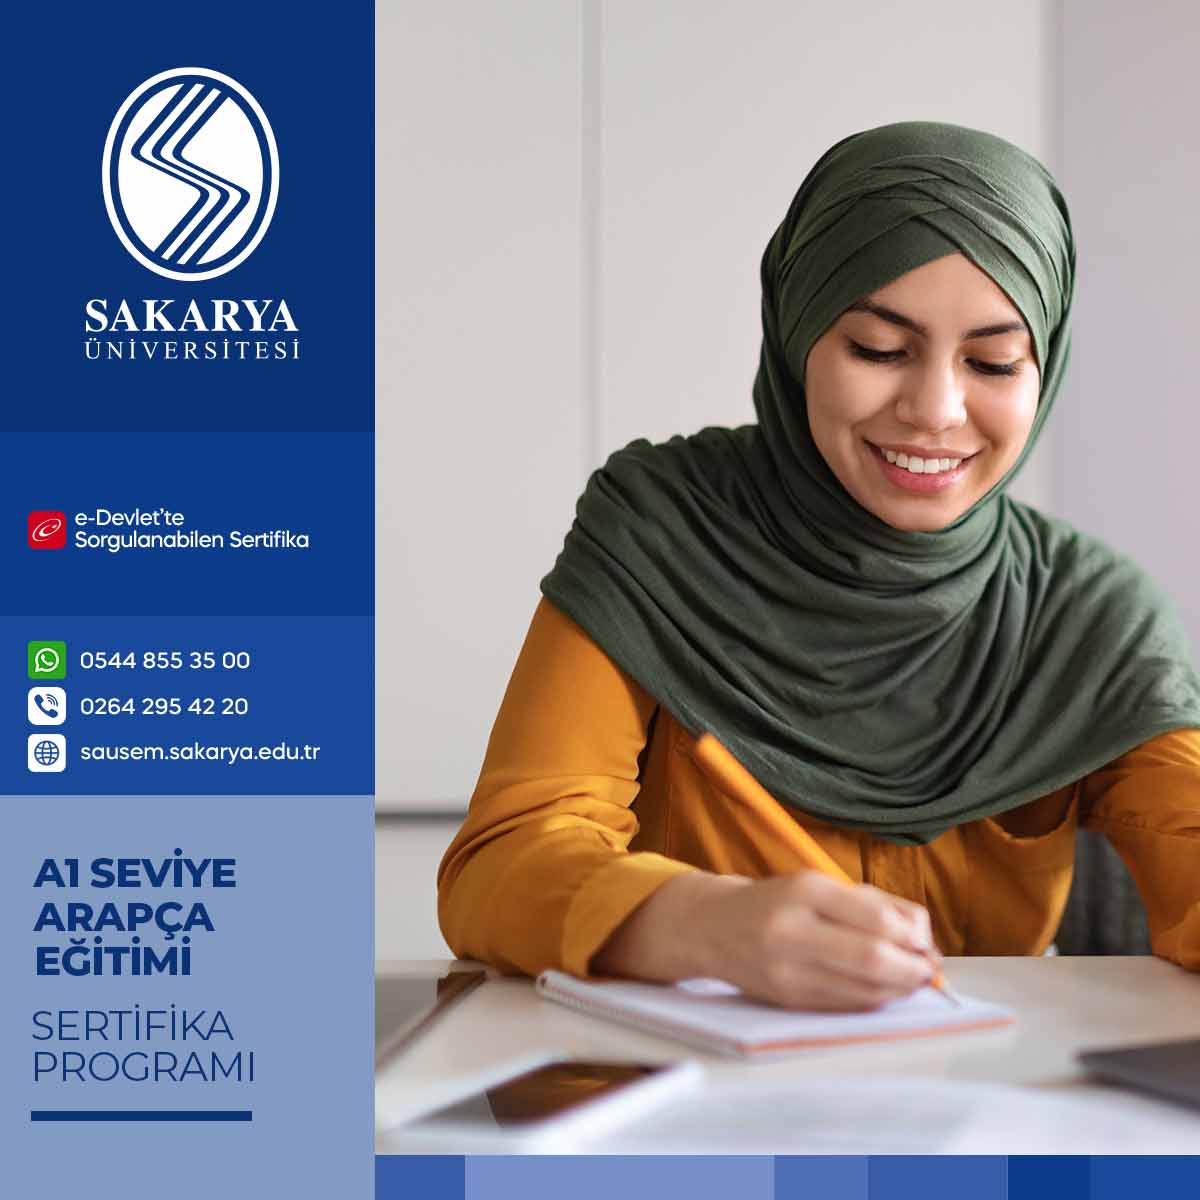 A1 Seviye Arapça Eğitimi Sertifika Programı